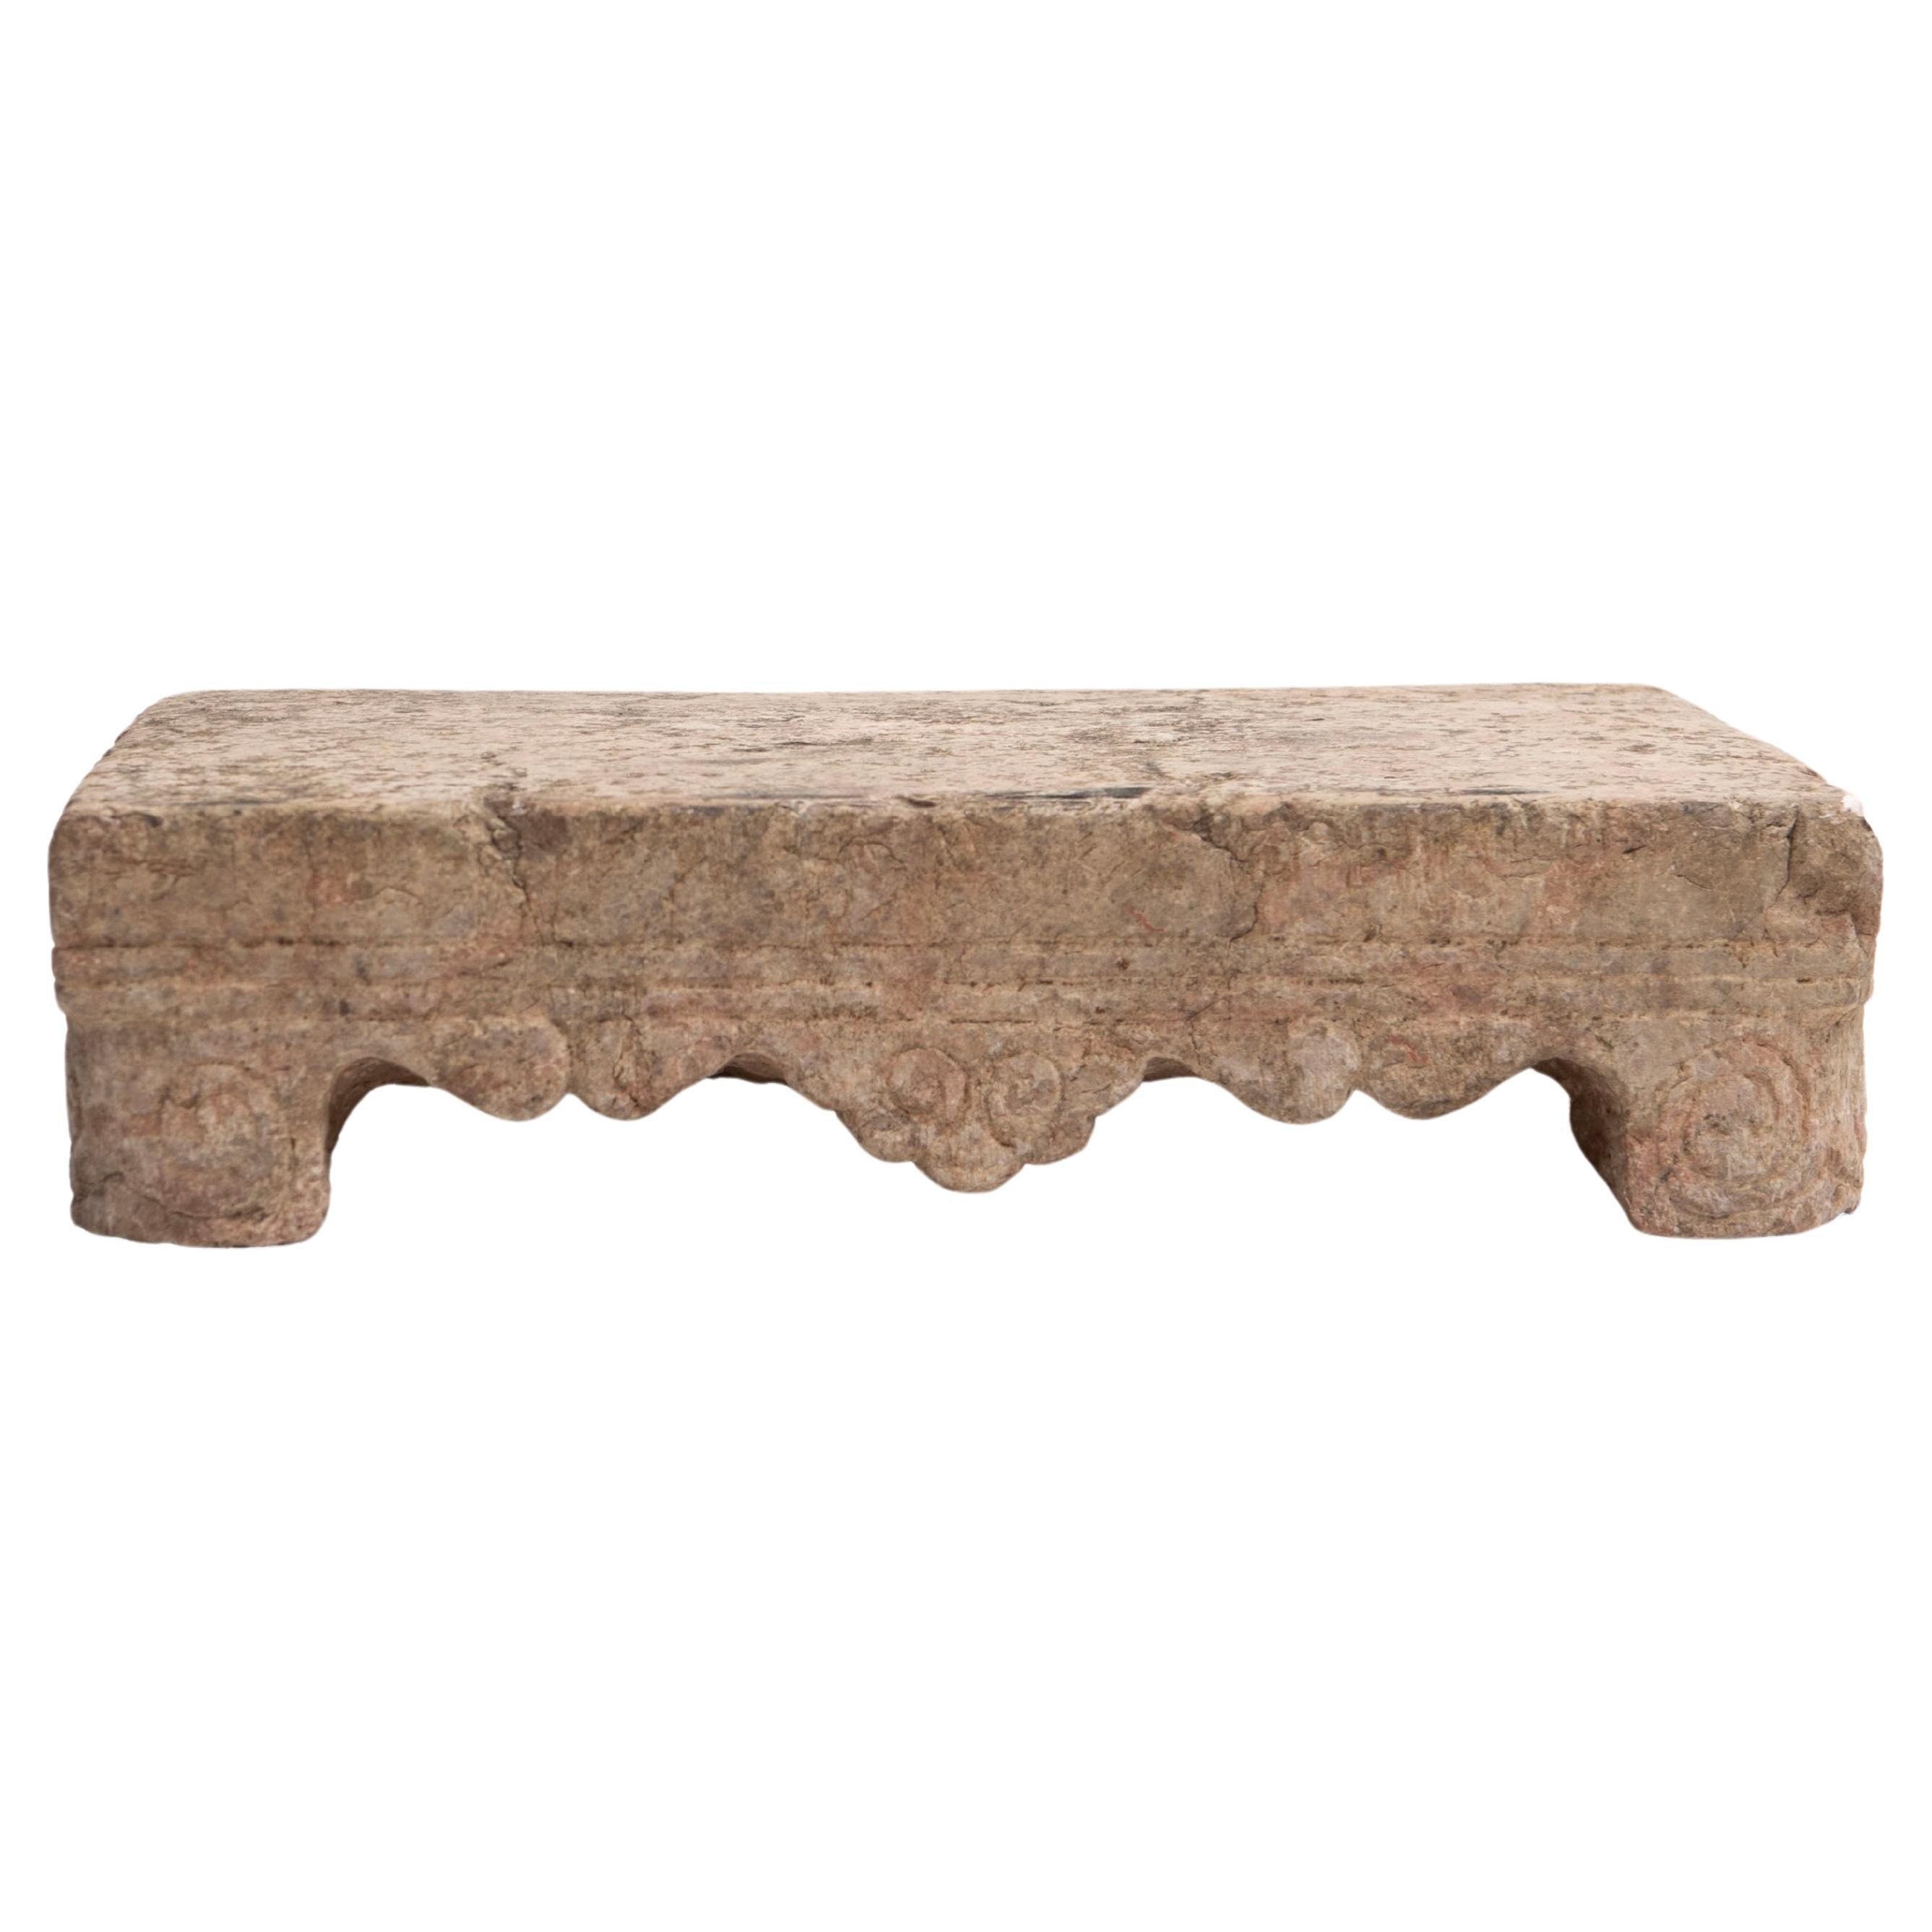 Ancienne table chinoise en pierre de Ming, vers 1500- 1600